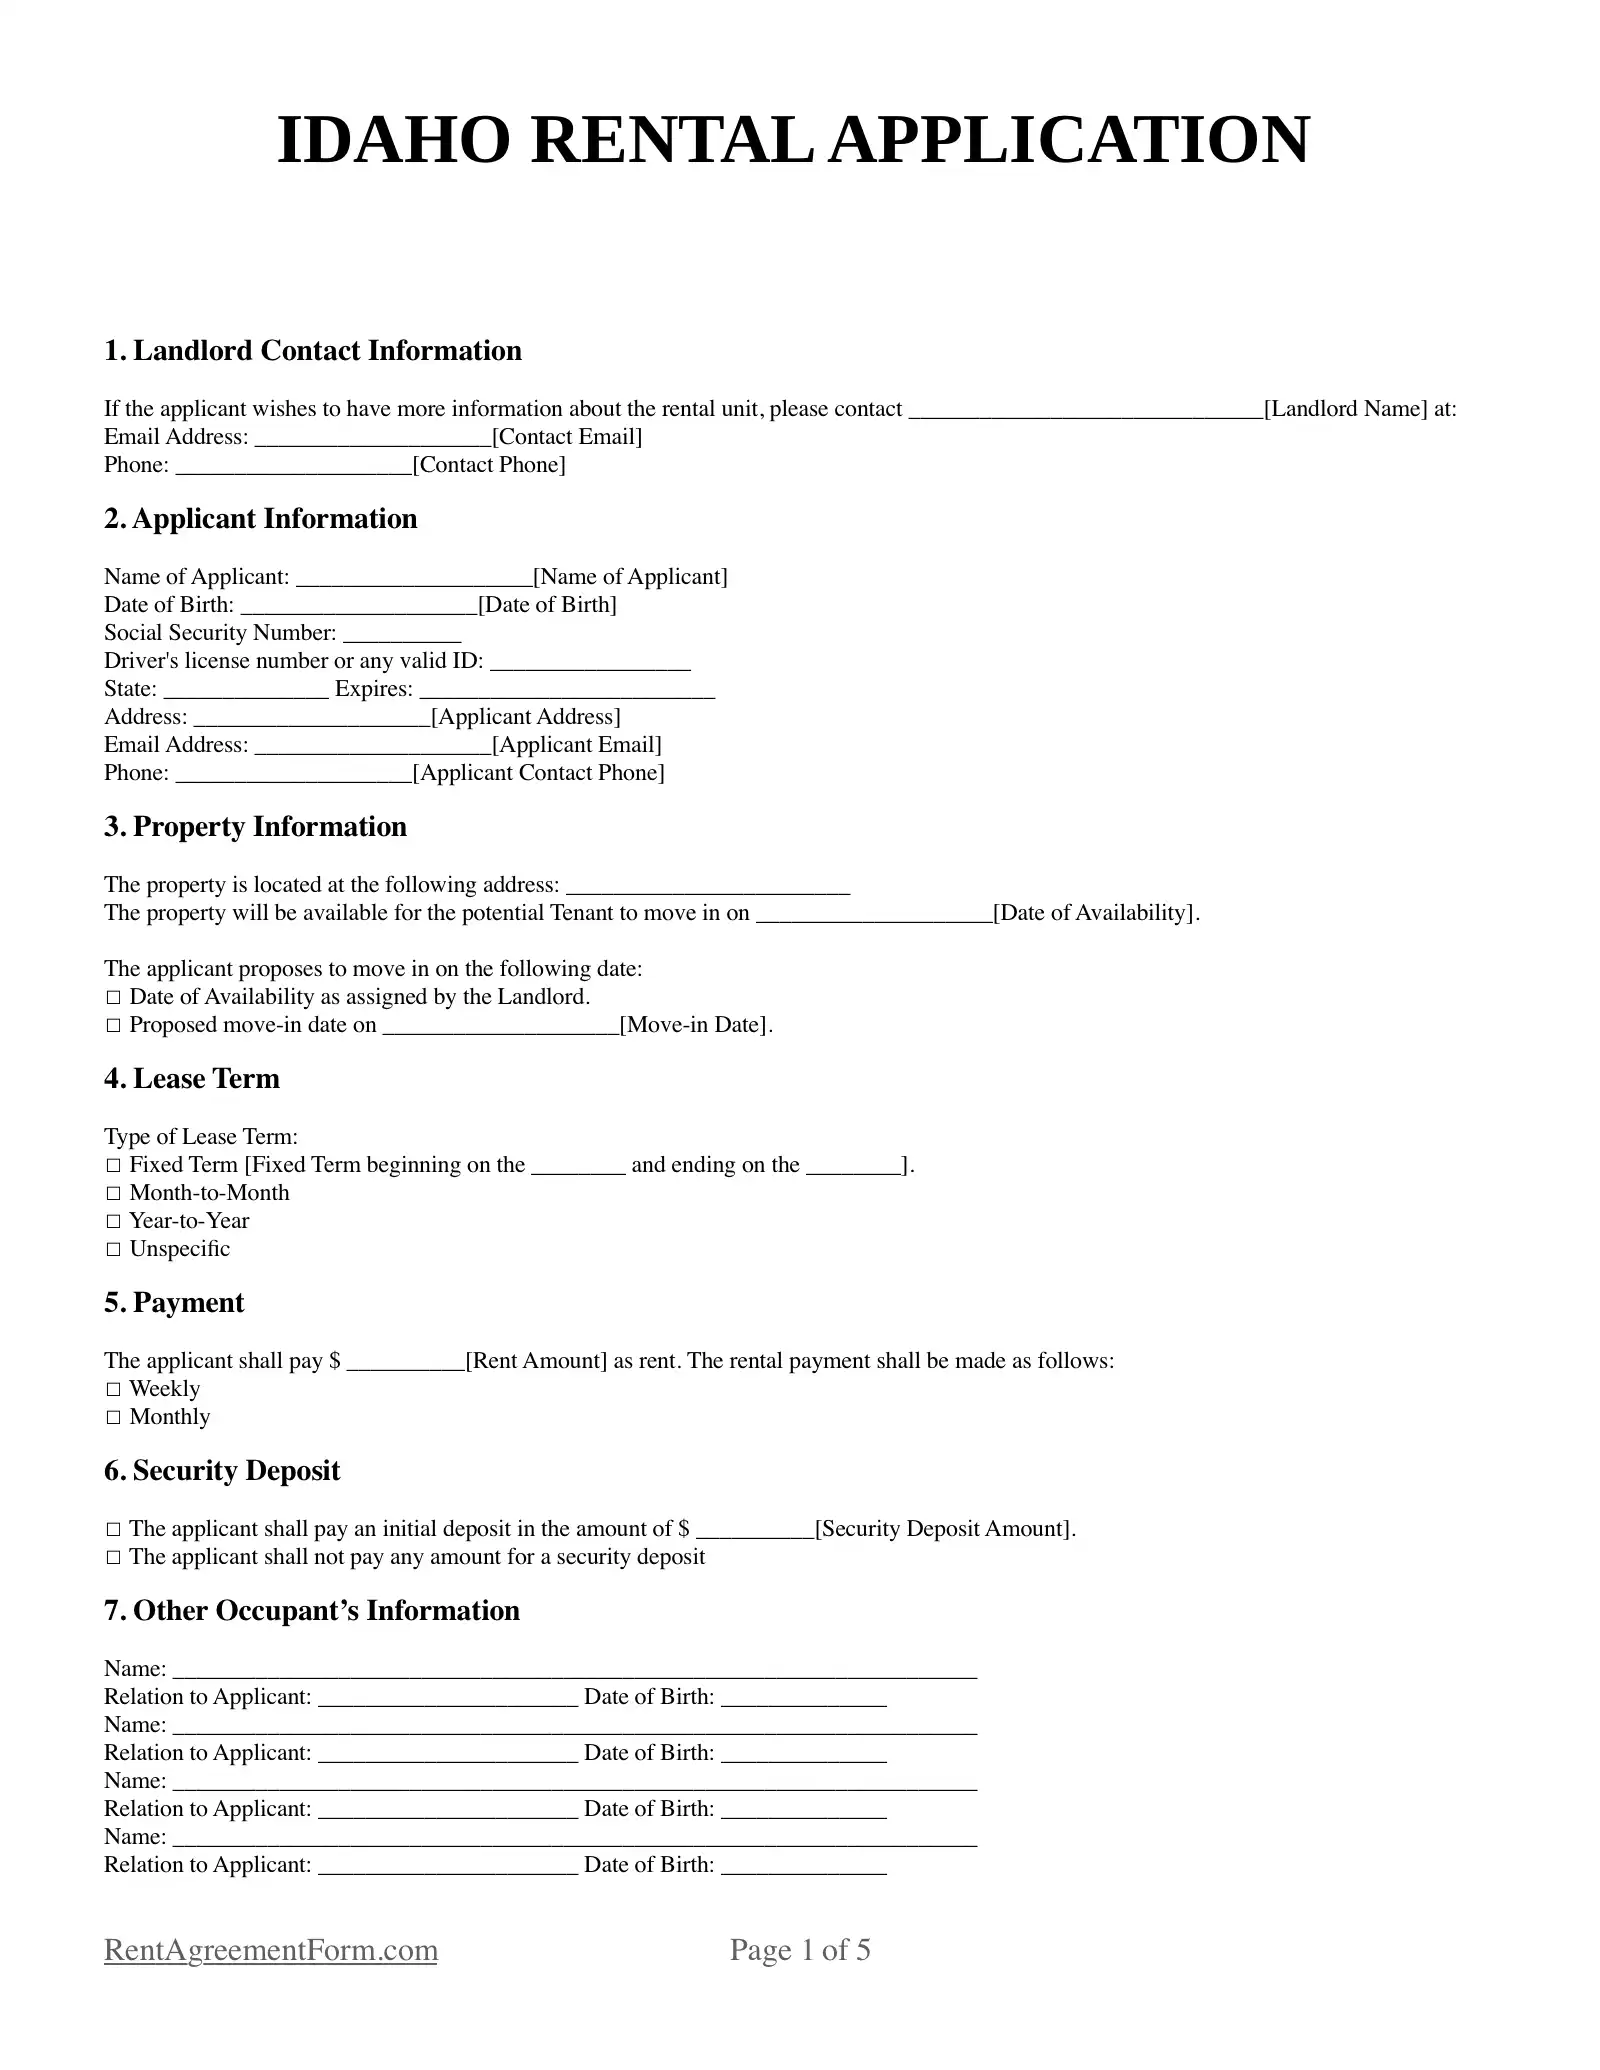 Idaho Rental Application Sample